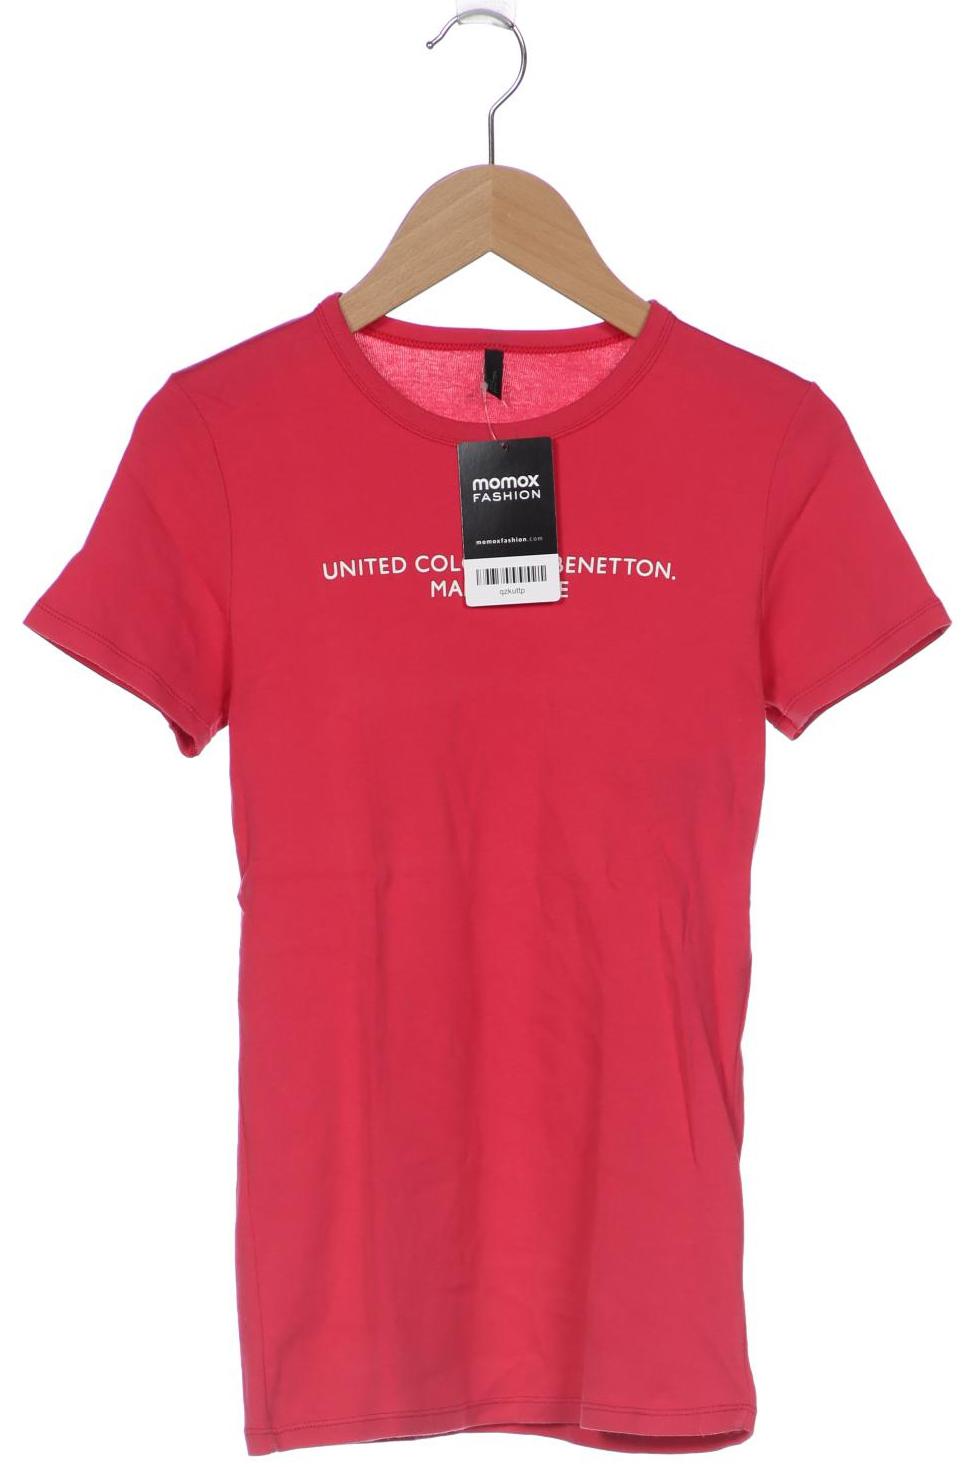 UNITED COLORS OF BENETTON Damen T-Shirt, pink von United Colors of Benetton